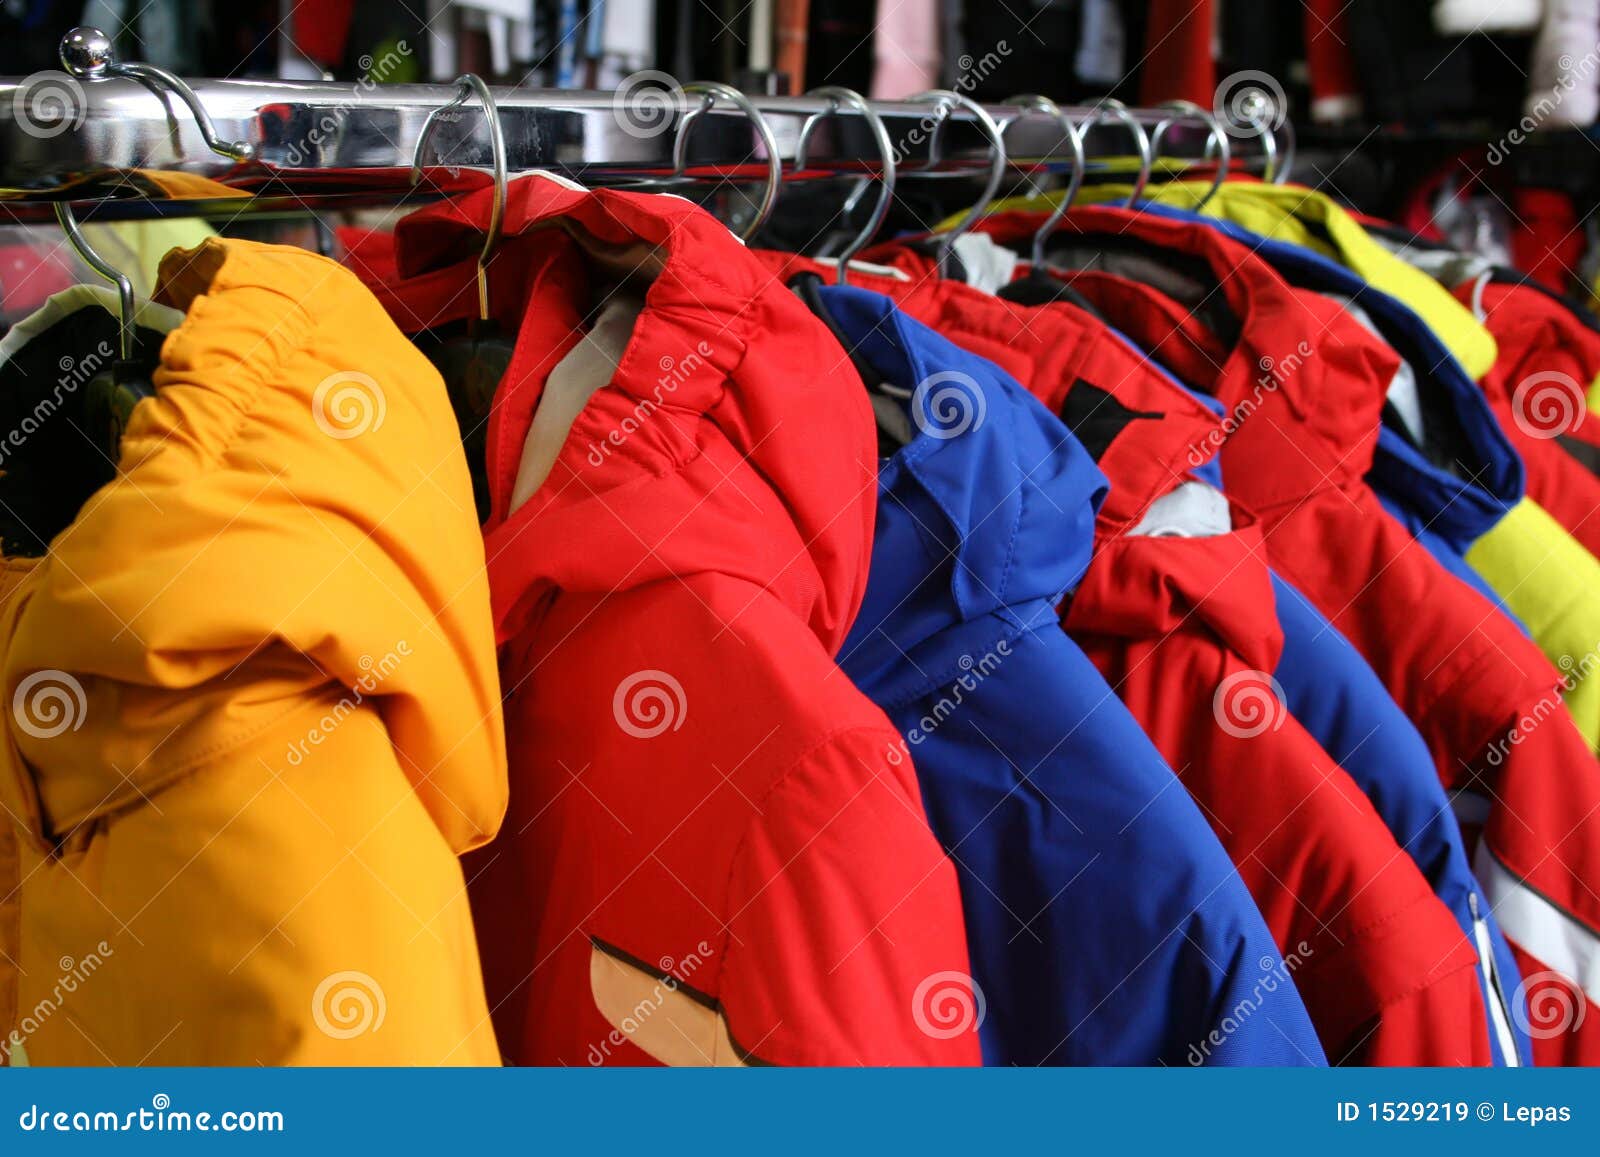 coats on rack in shop